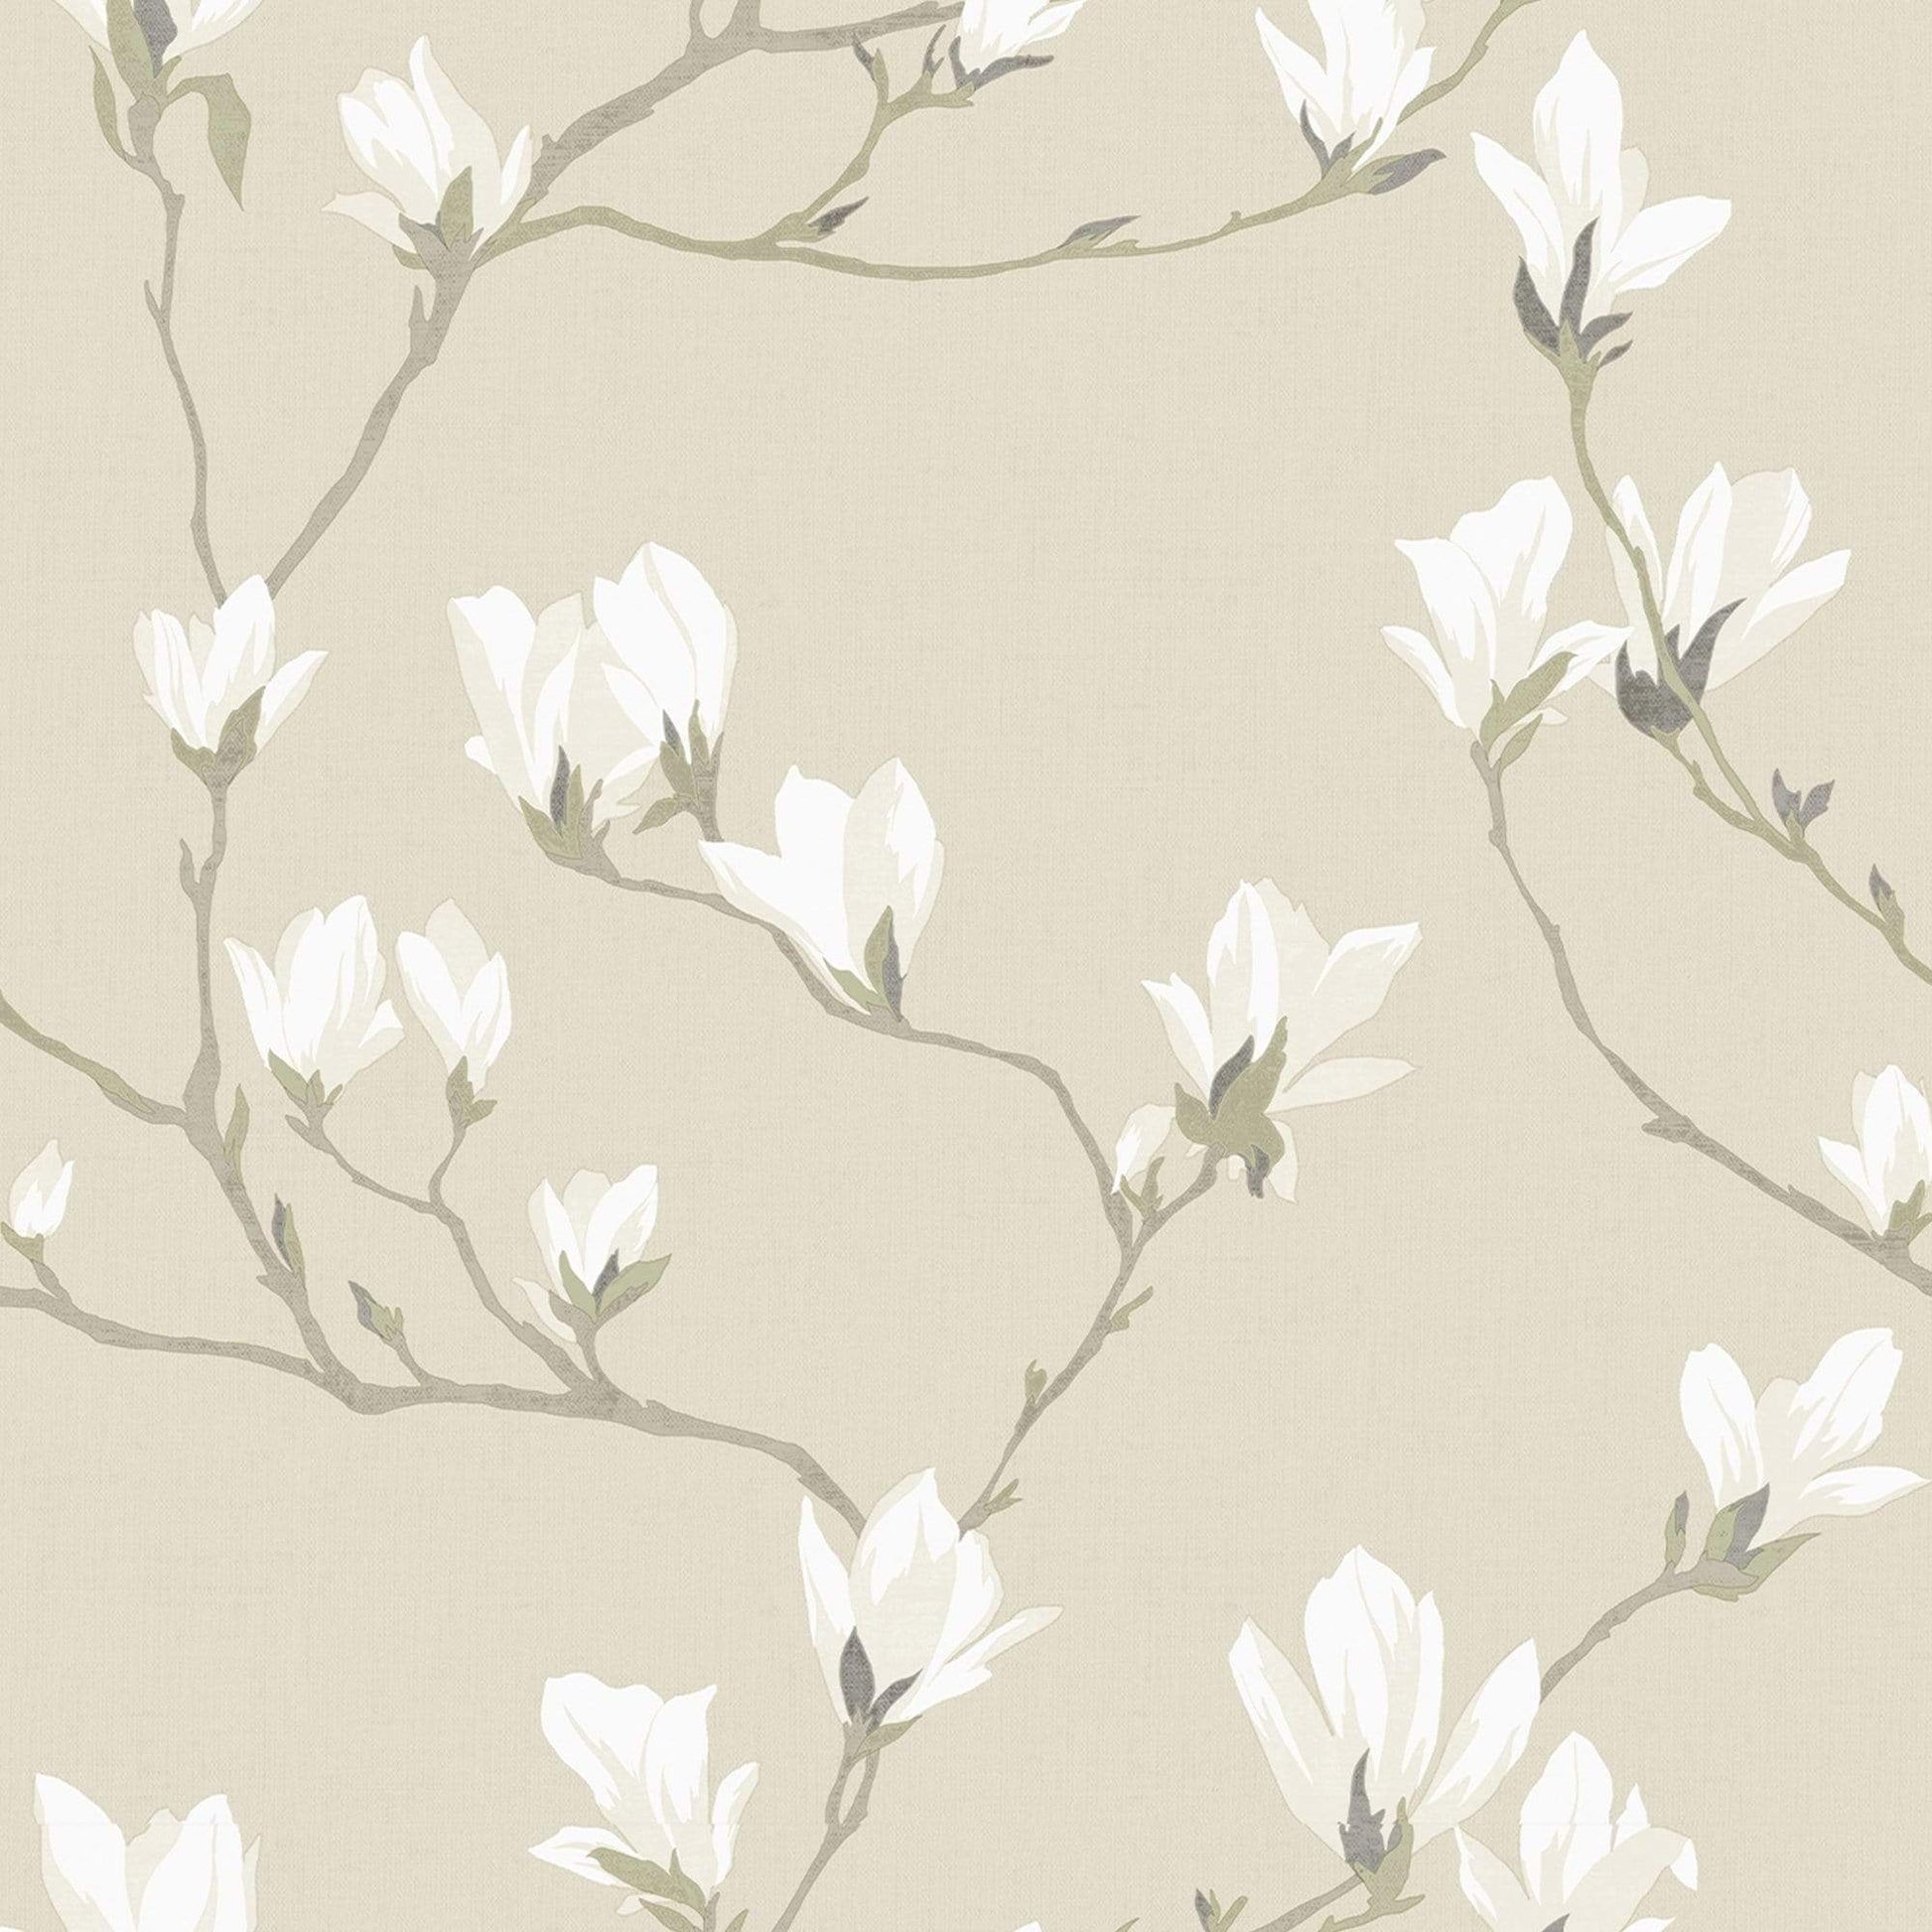 Wallpaper  -  Laura Ashley Magnolia Grove Natural Wallpaper - 113353  -  60001888